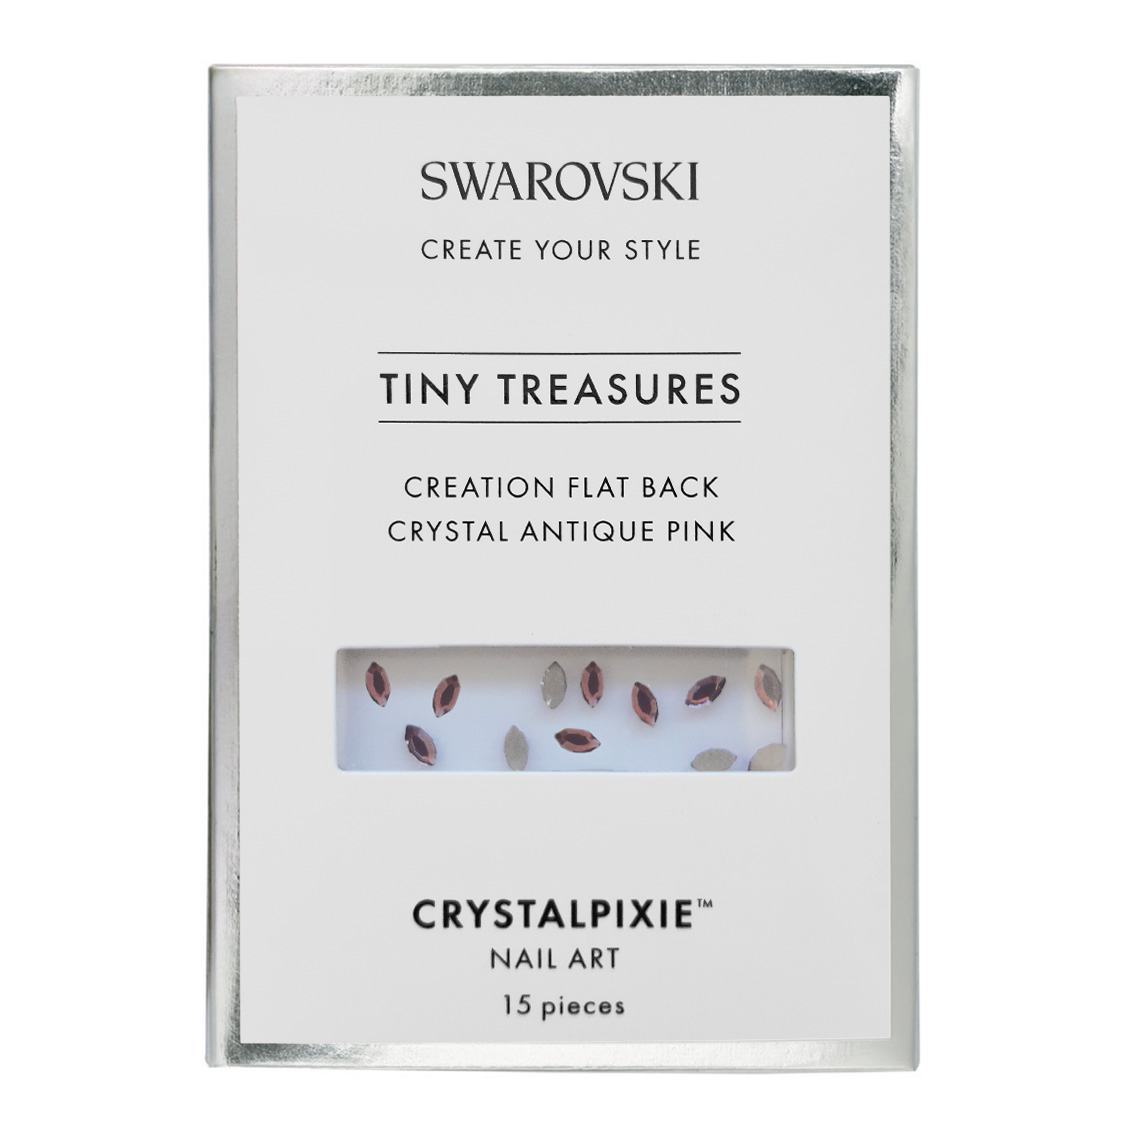 Creation Flat Back - Kristall Antique Pink 15 Stück - Swarovski® Tiny Treasures